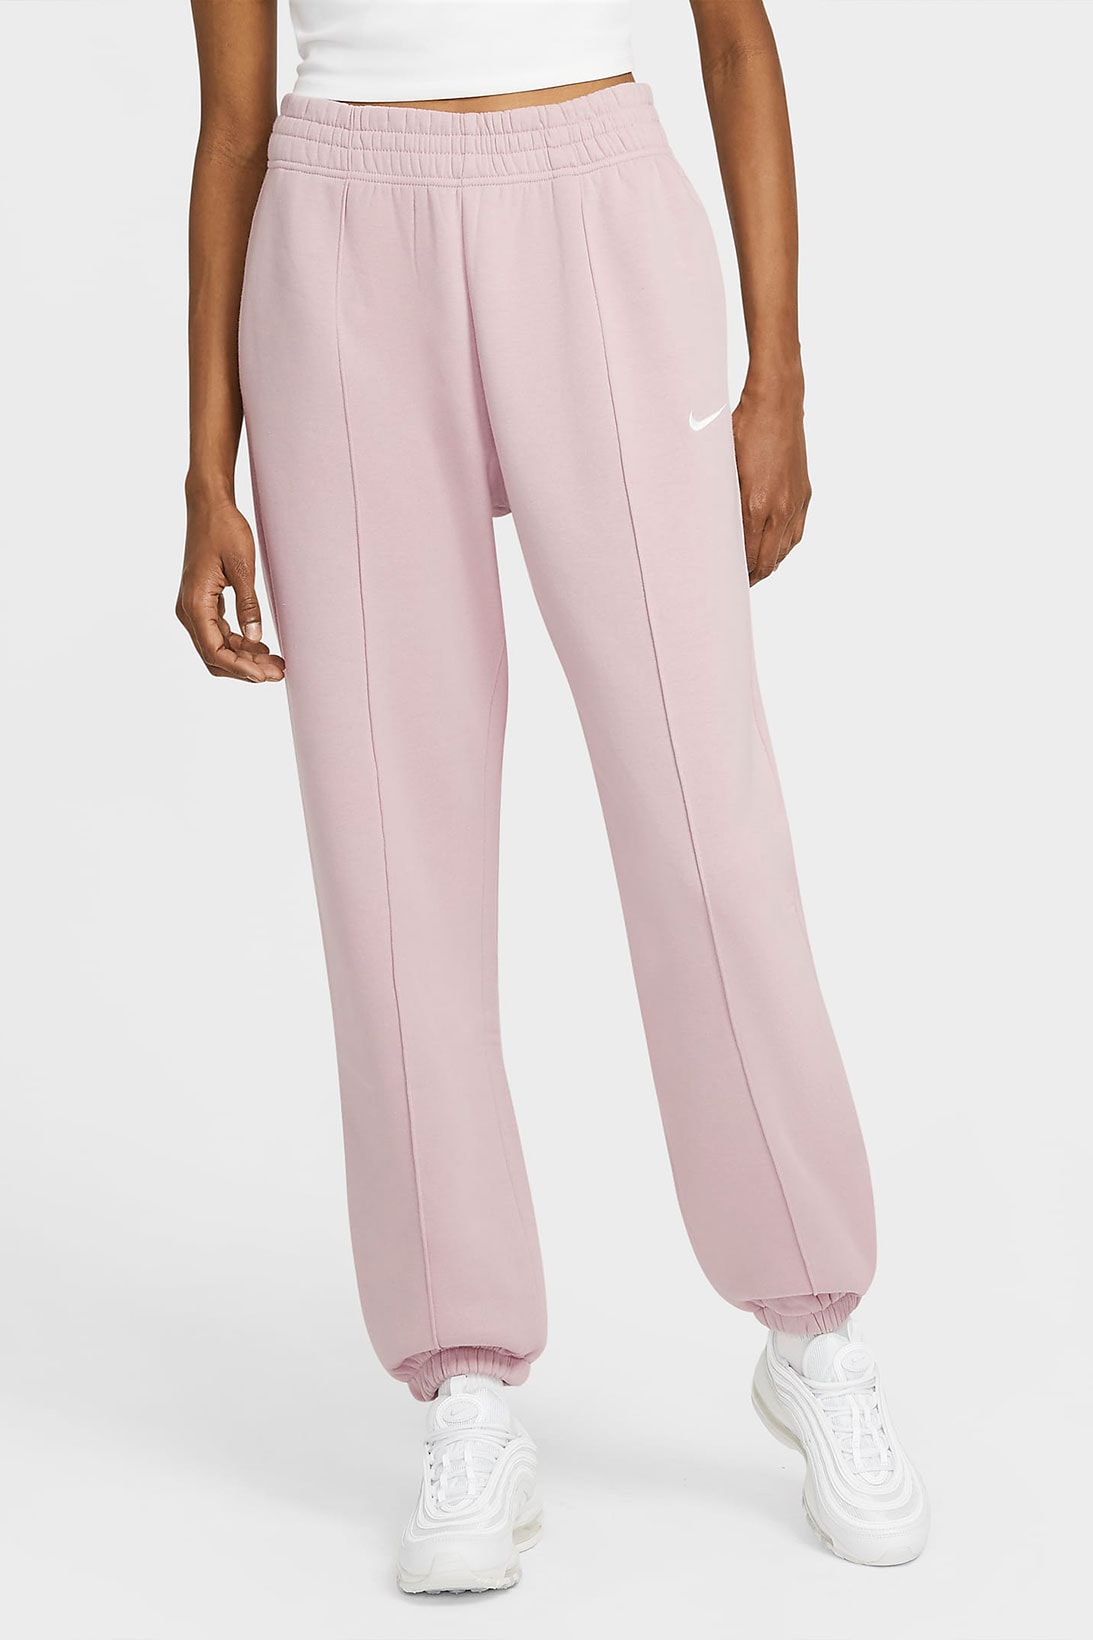 Nike Sweatpants Flare Sweats Black Pink Lounge Pants size Medium